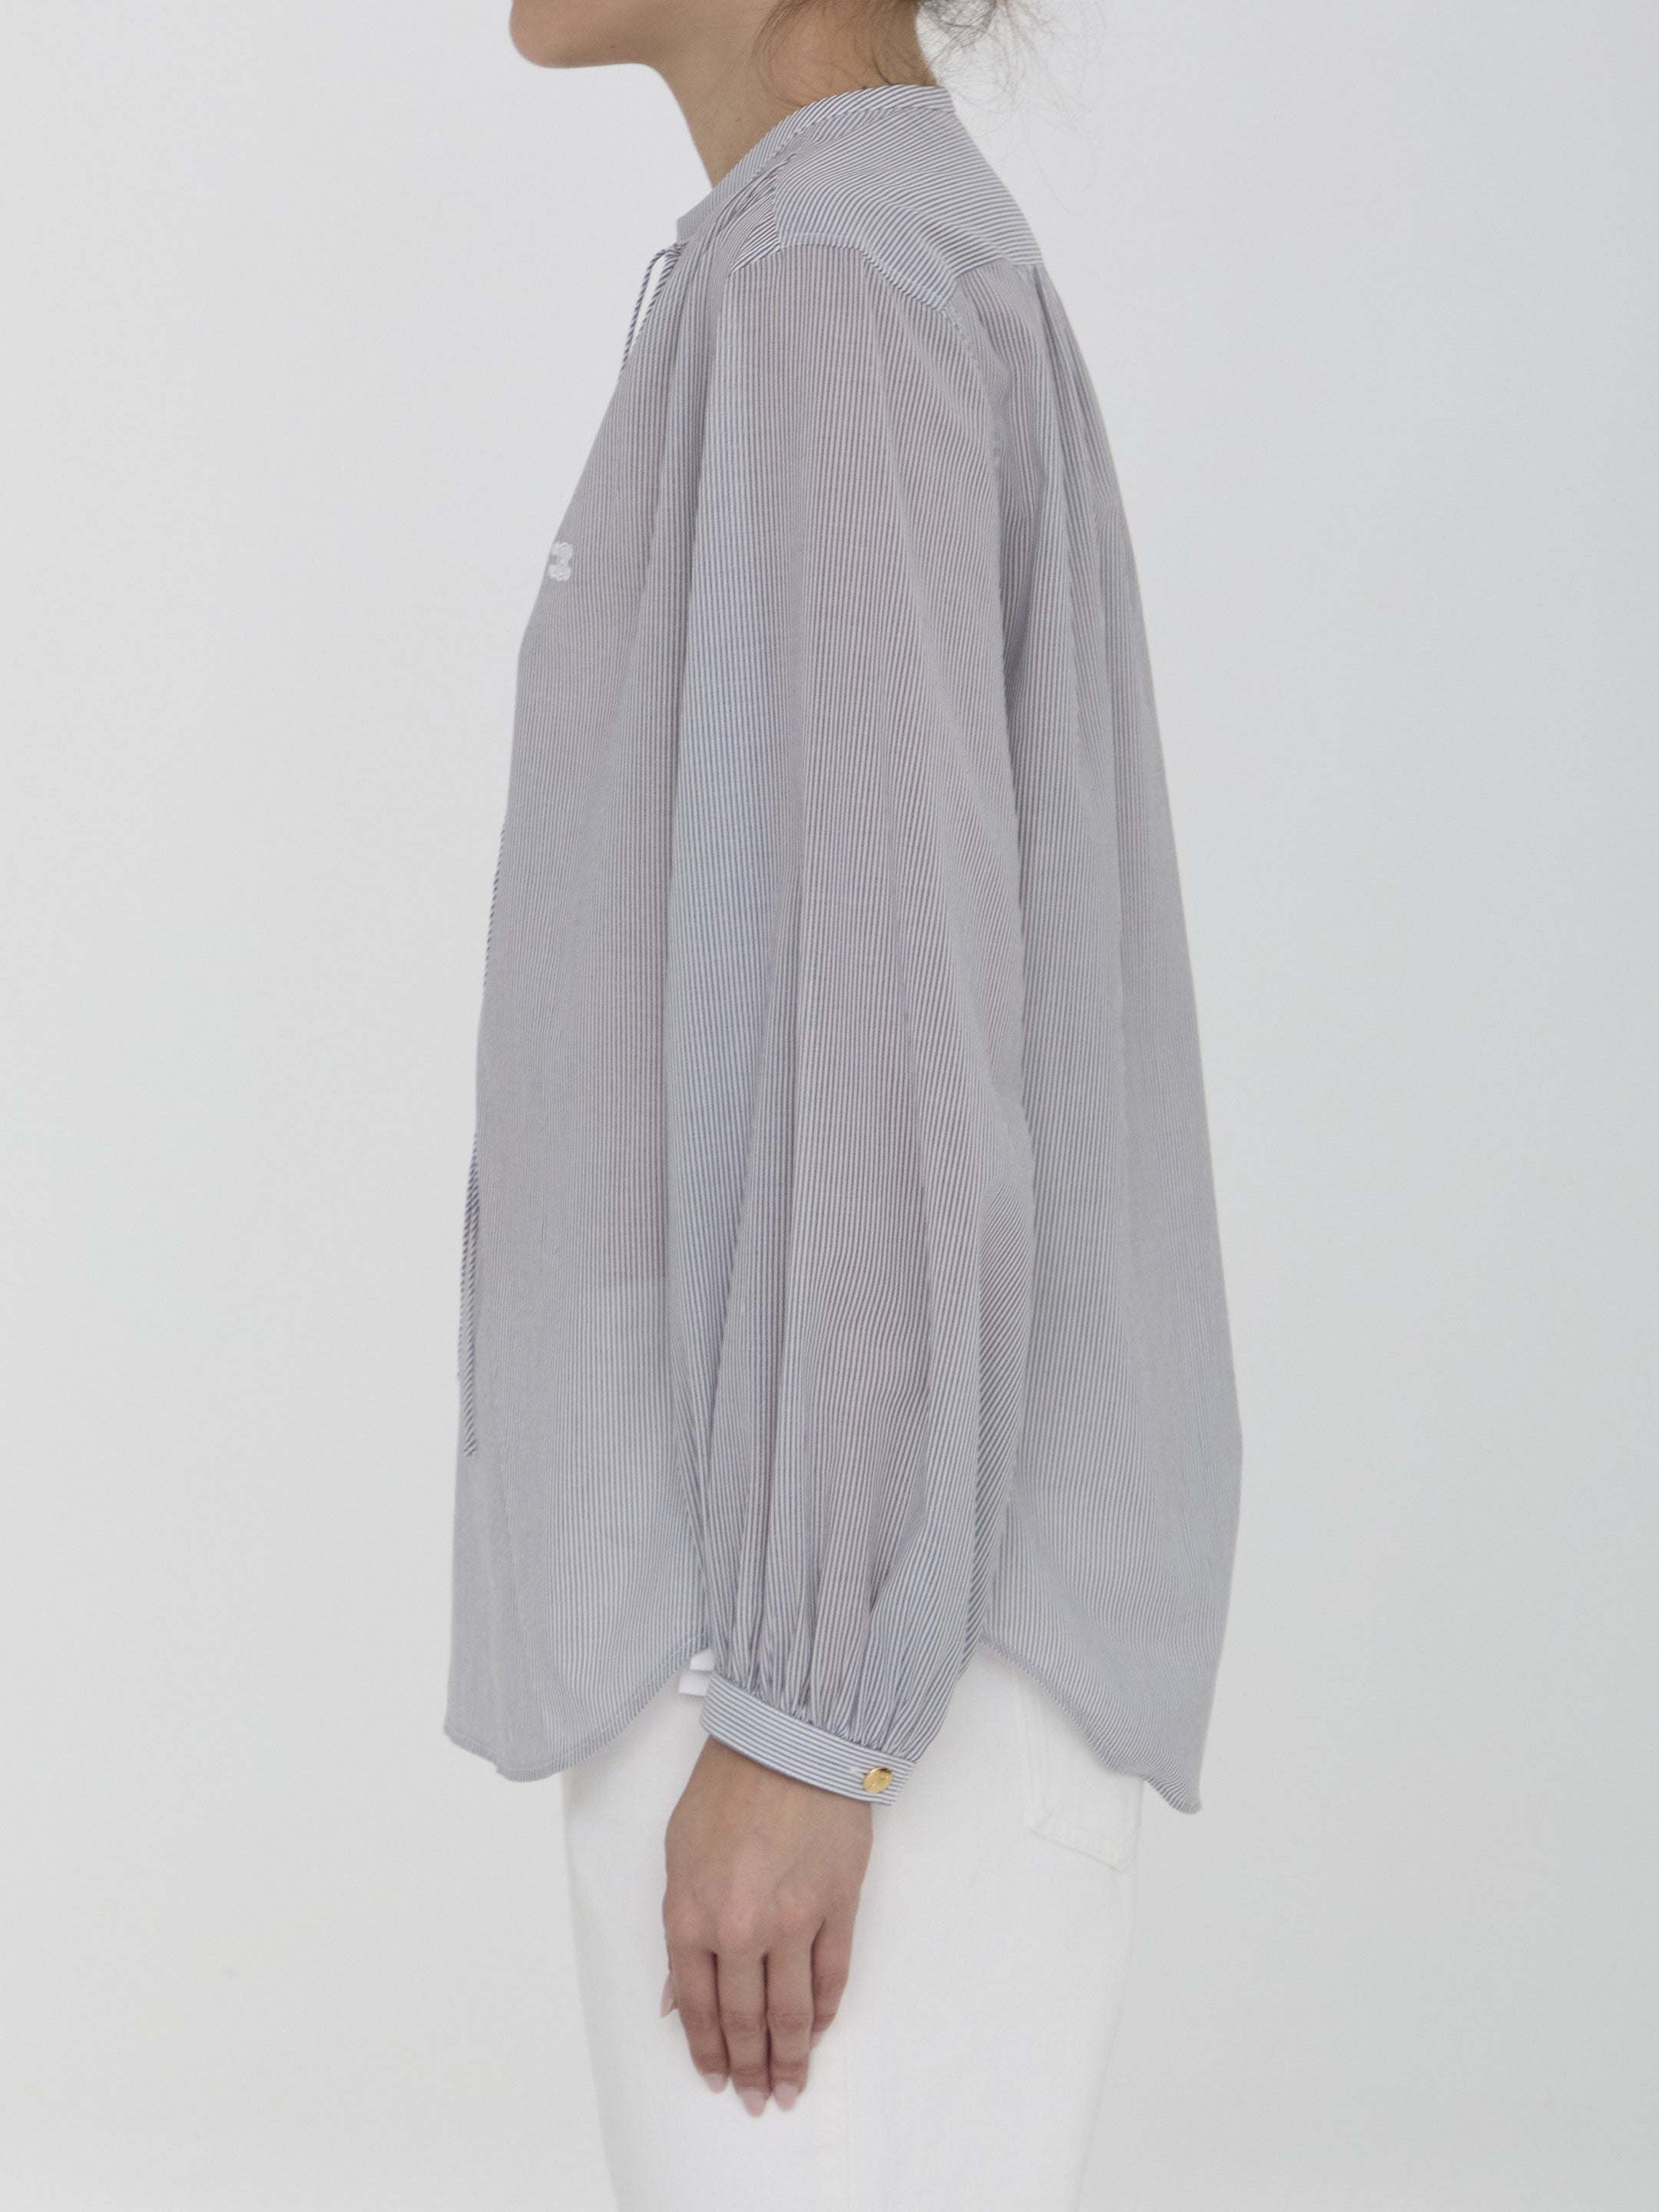 CELINE-OUTLET-SALE-Romy-blouse-Blusen-ARCHIVE-COLLECTION-3.jpg